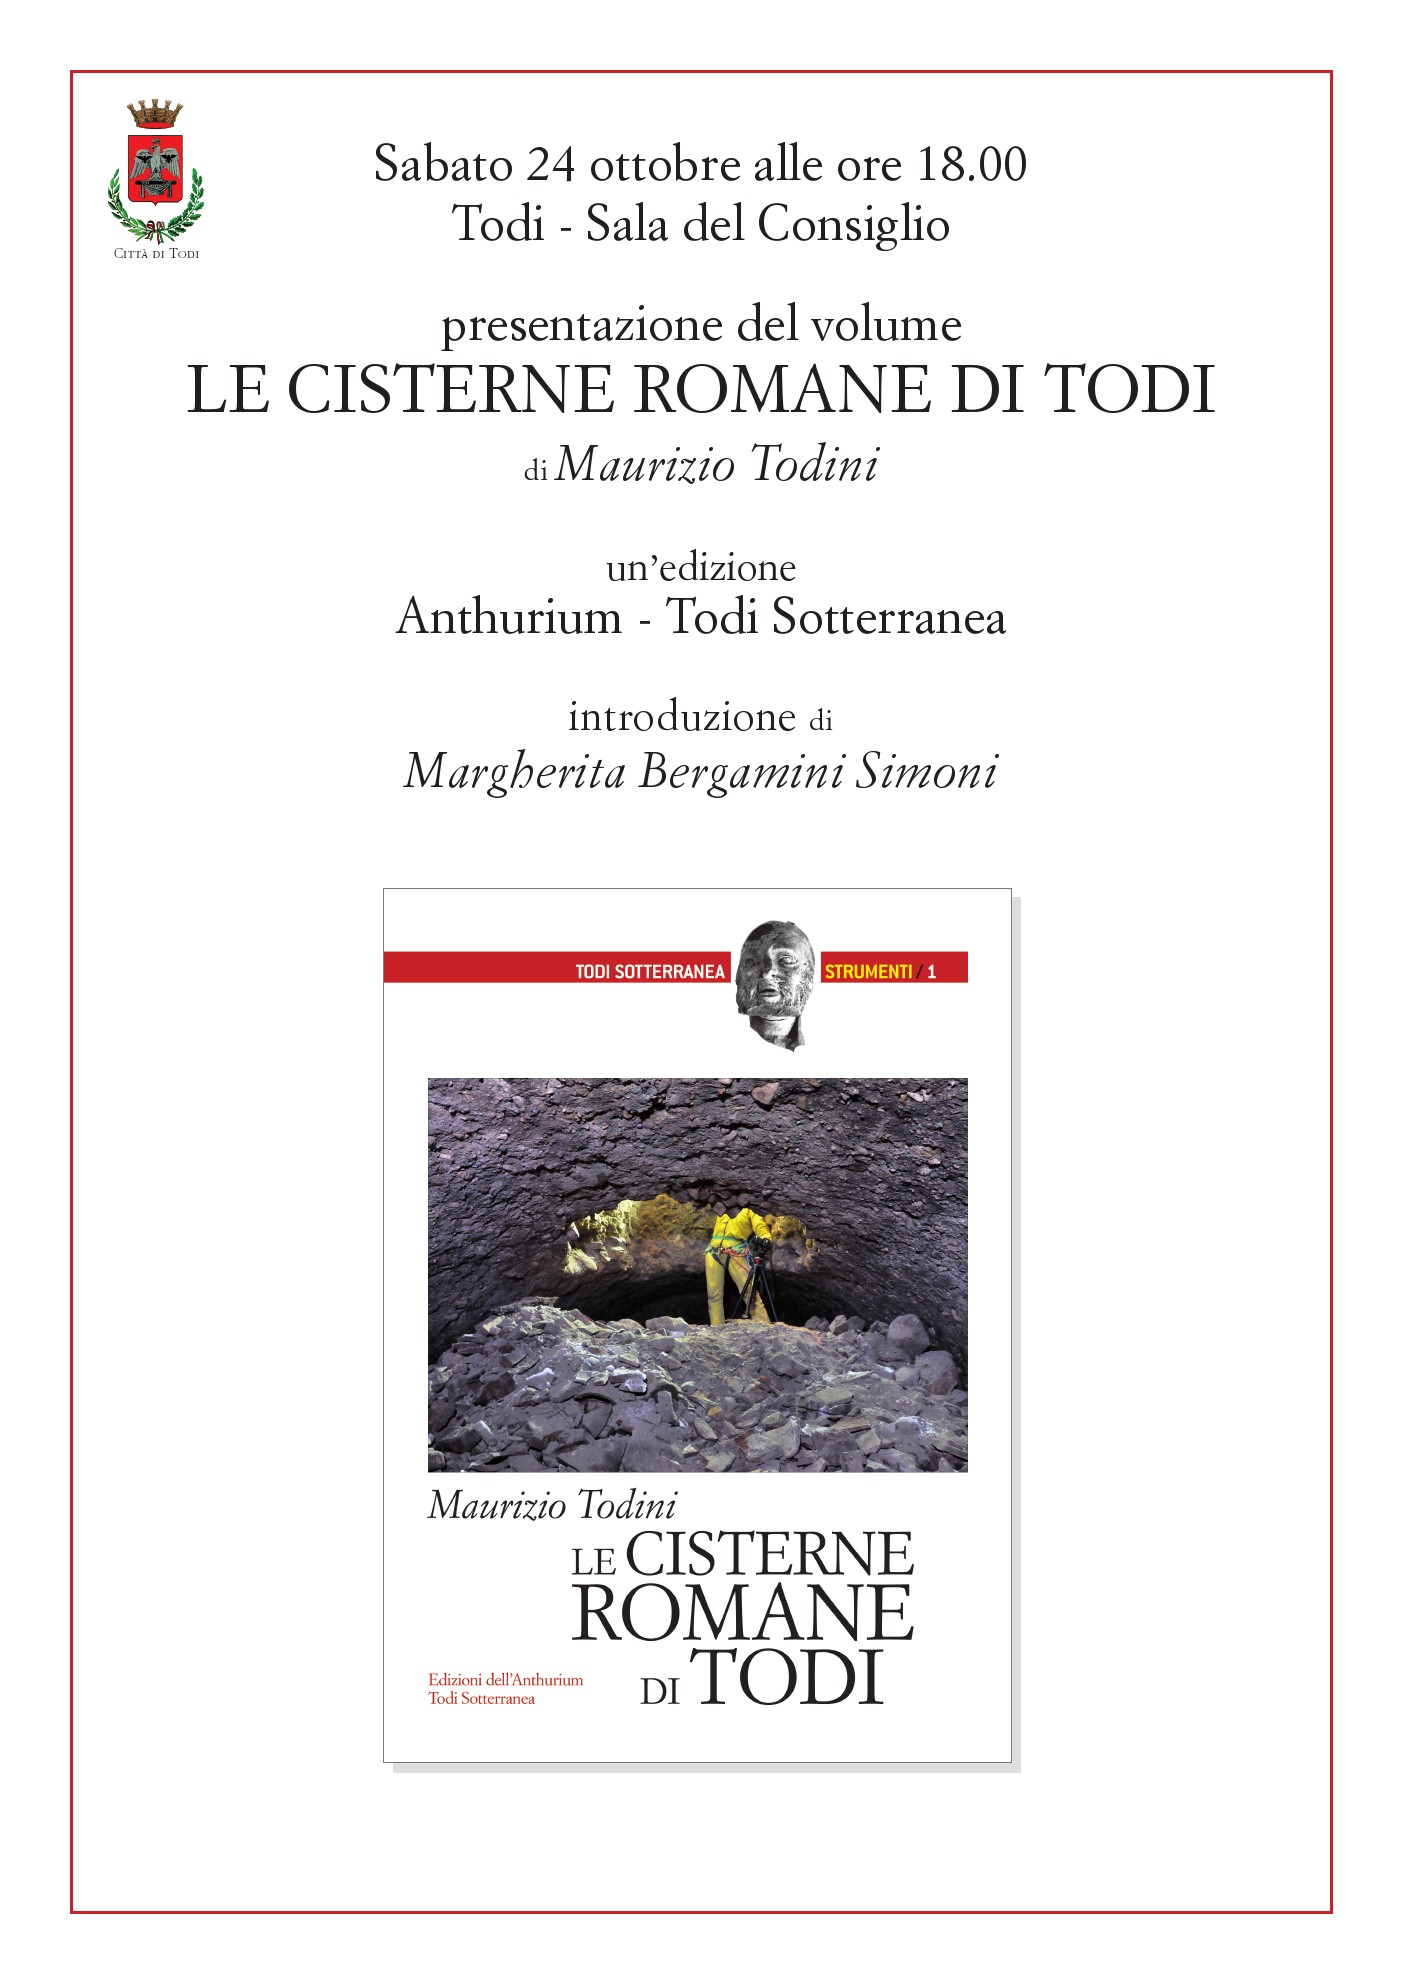 Cisterene Romane Todi Libro 24ott2015 locandina